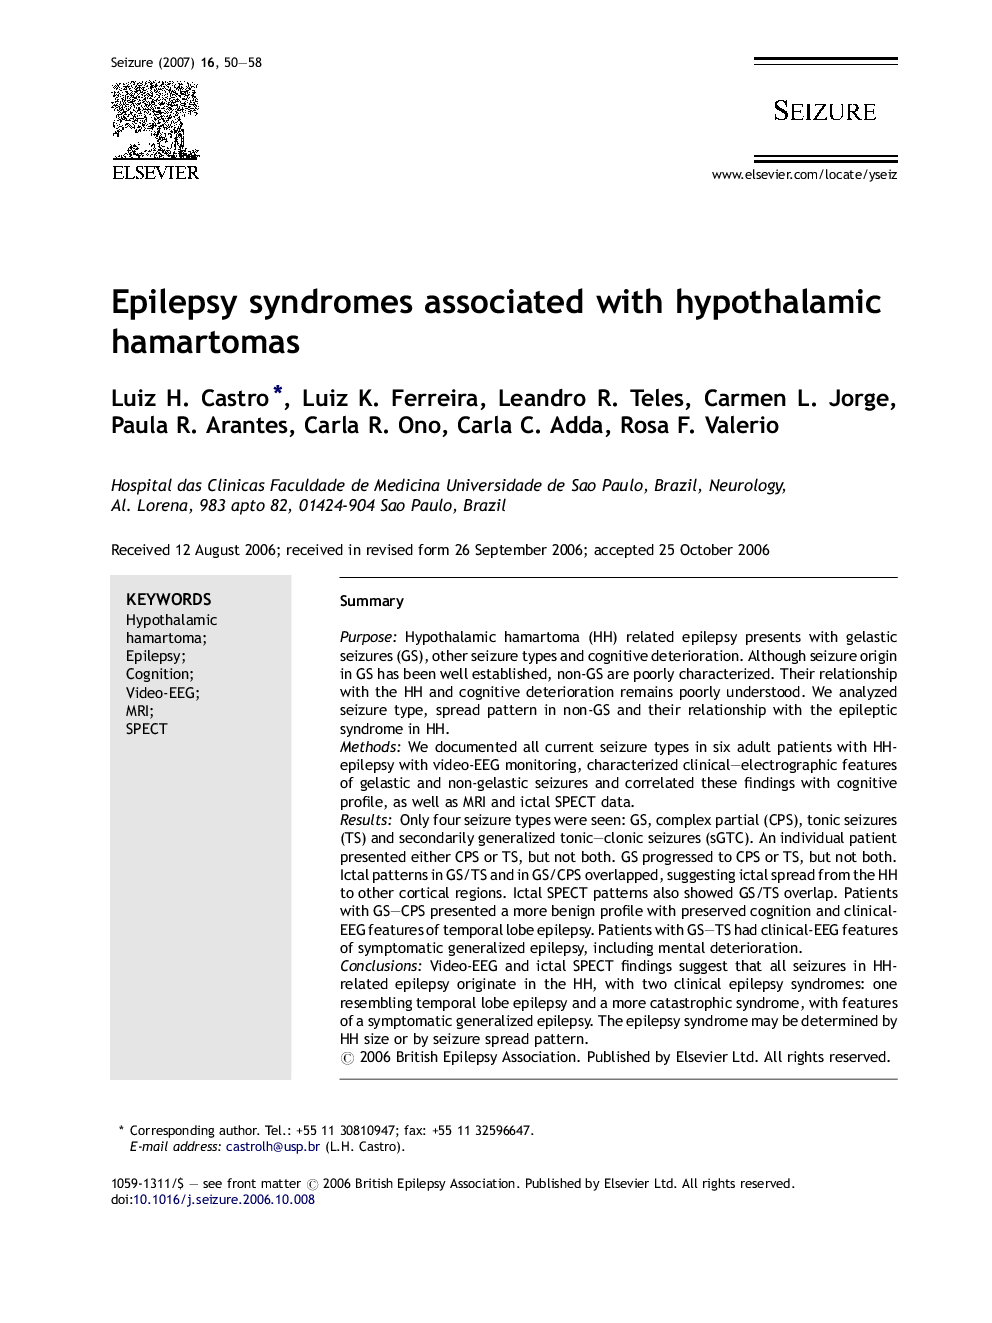 Epilepsy syndromes associated with hypothalamic hamartomas